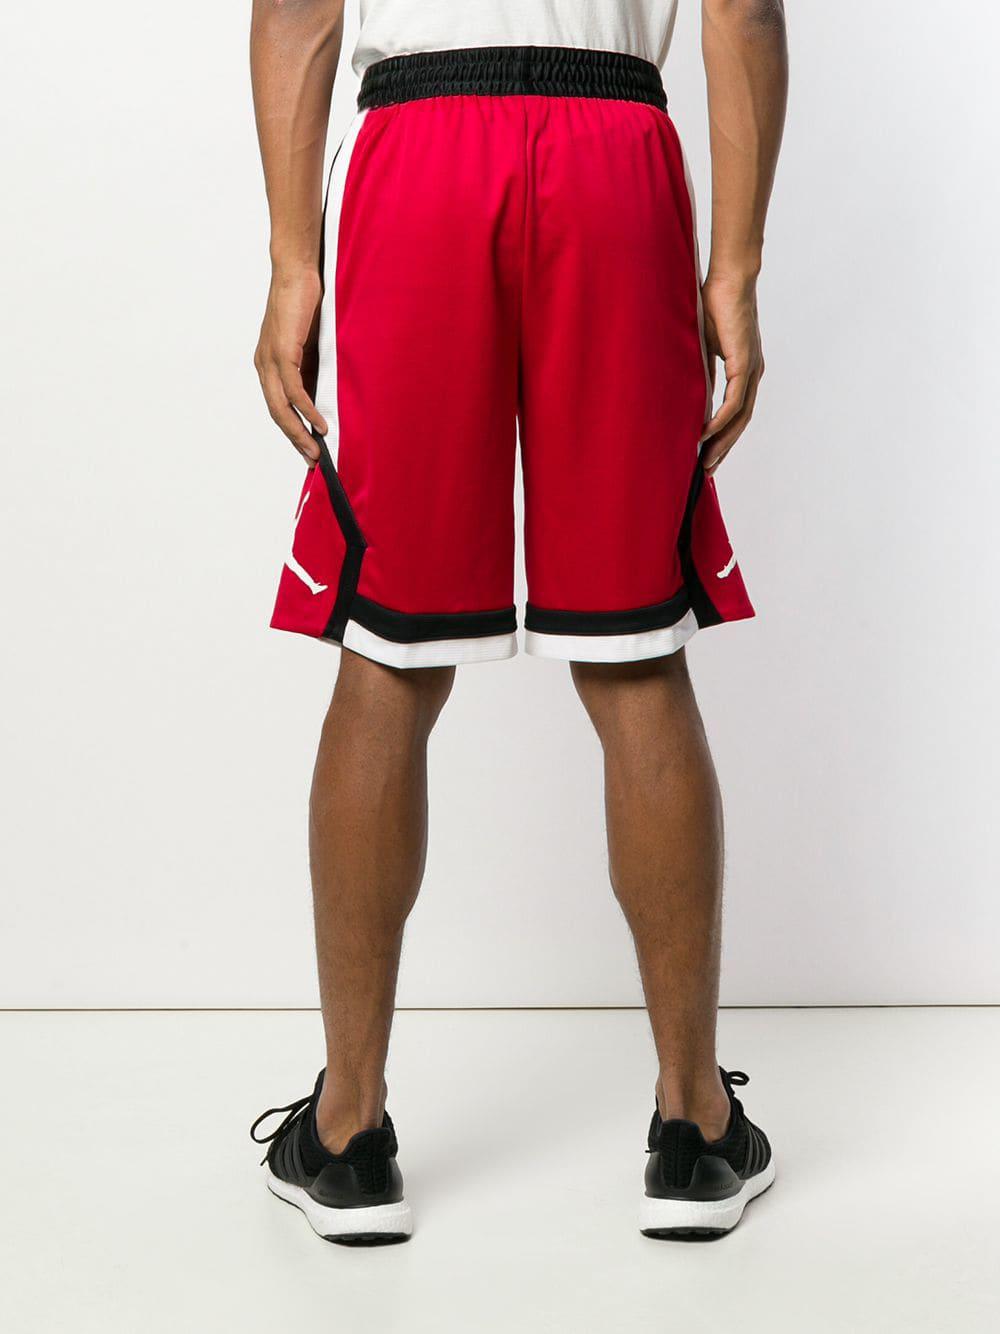 Nike Air Jordan Basketball Shorts in 